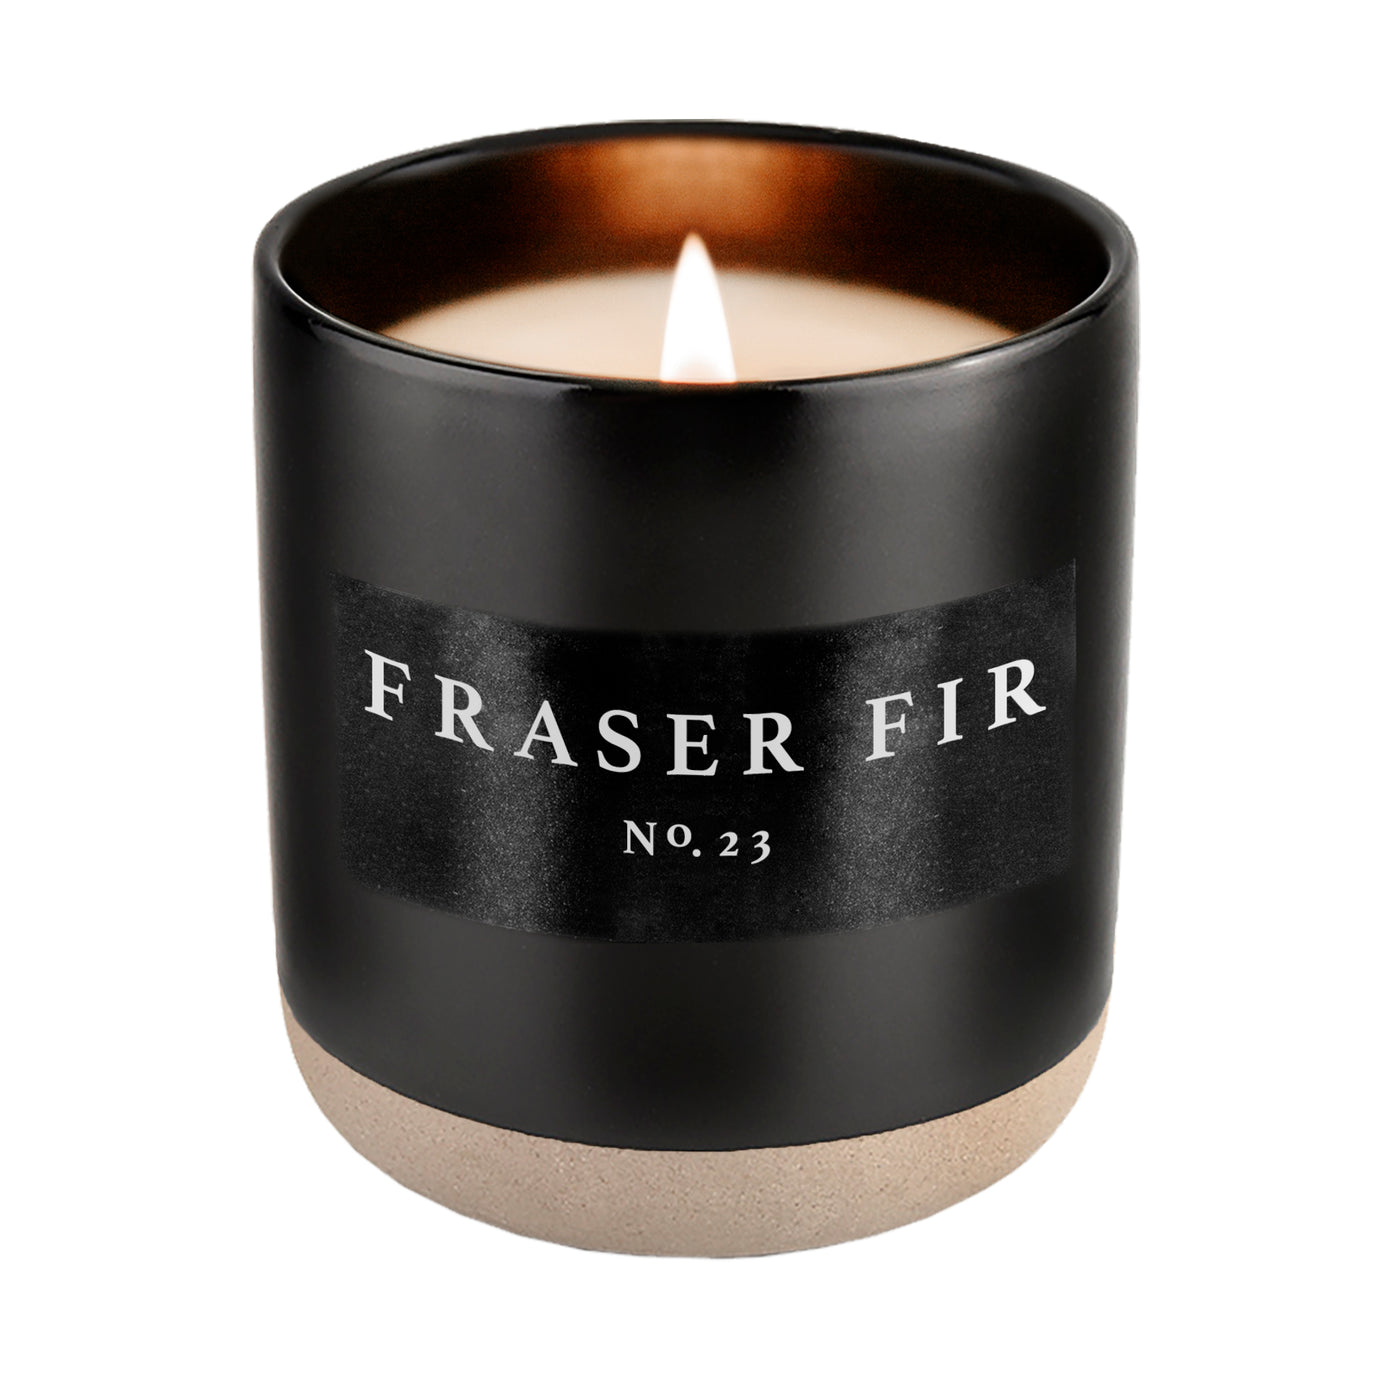 Fraser Fir Soy Candle - Black Stoneware Jar - 12 oz